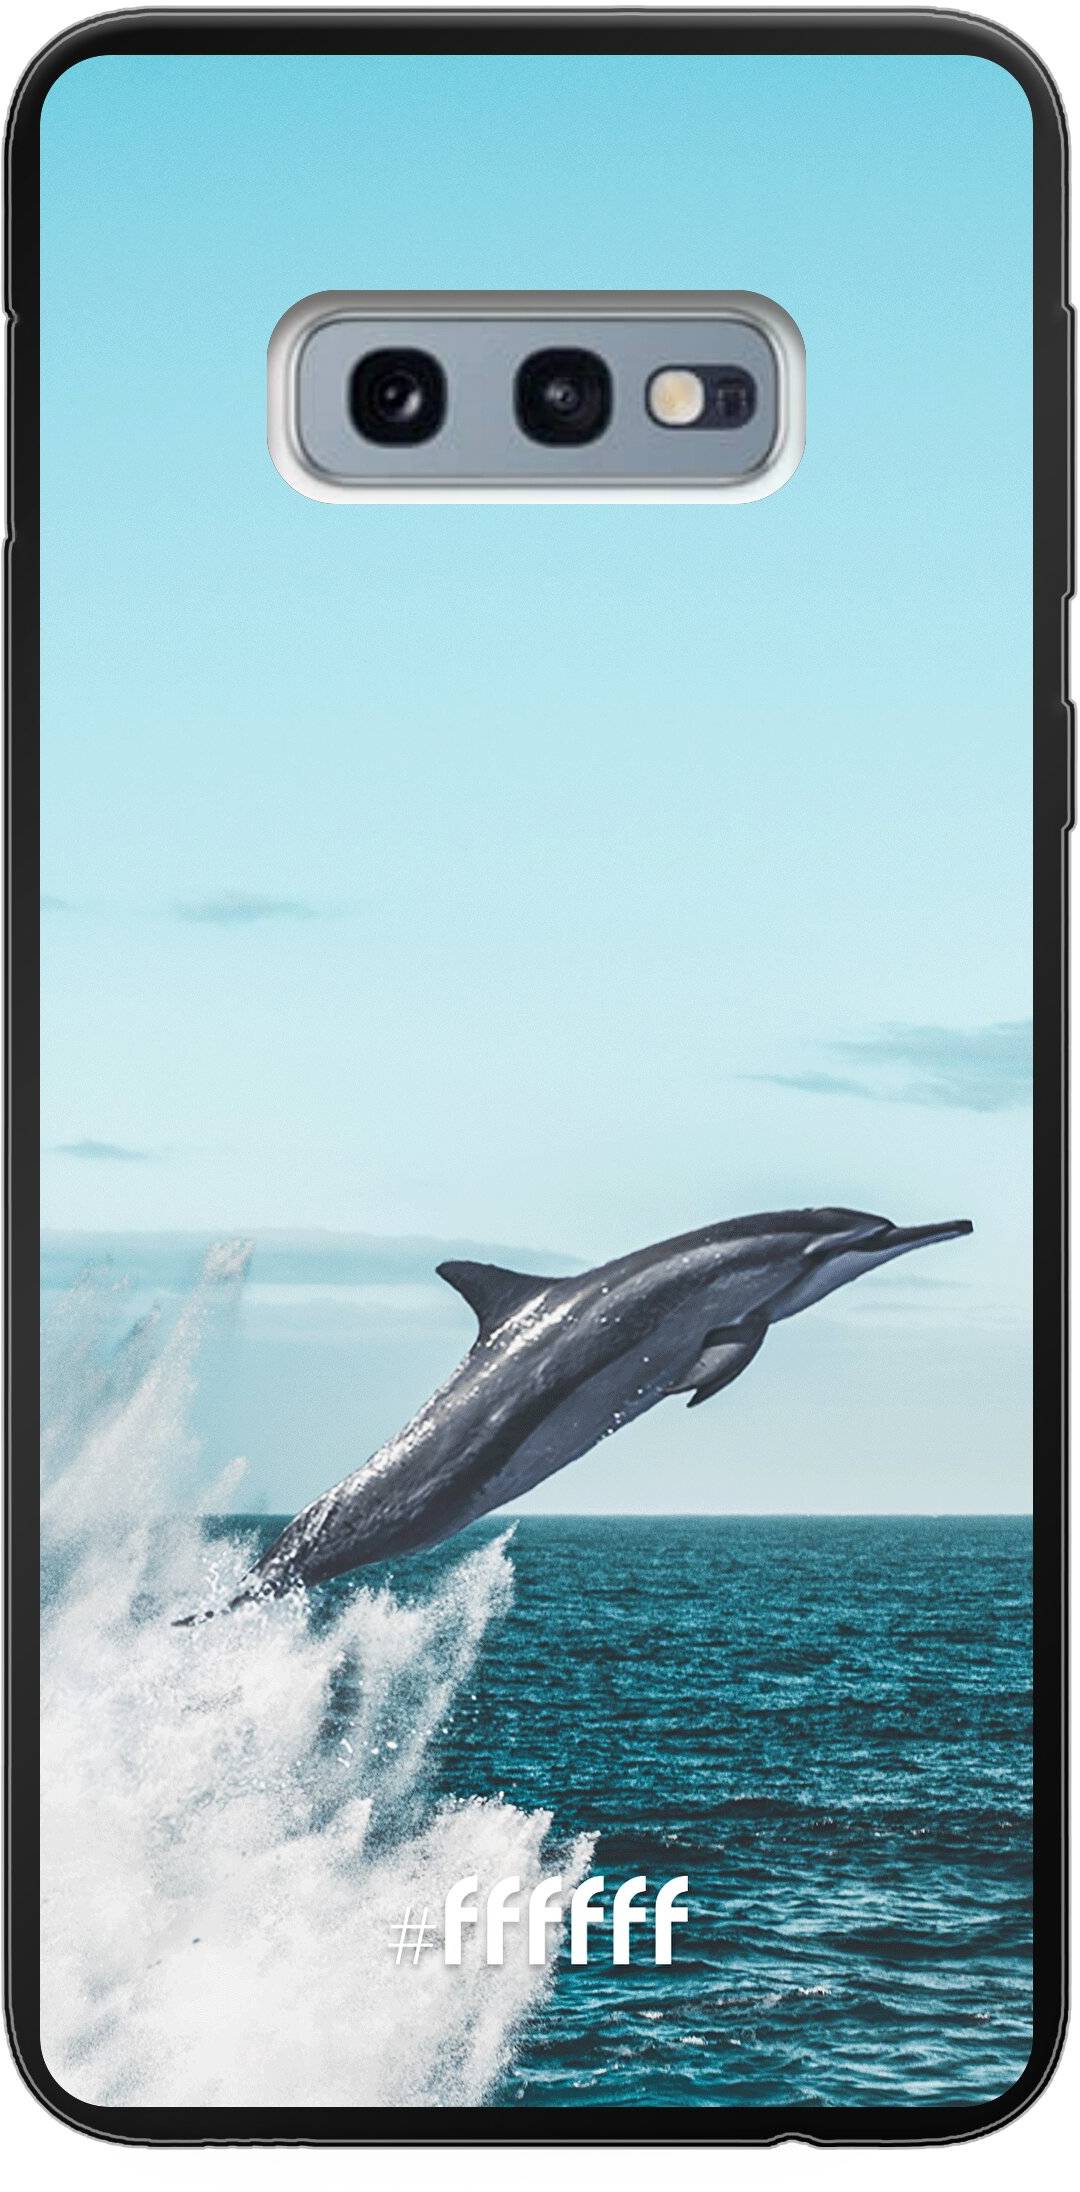 Dolphin Galaxy S10e